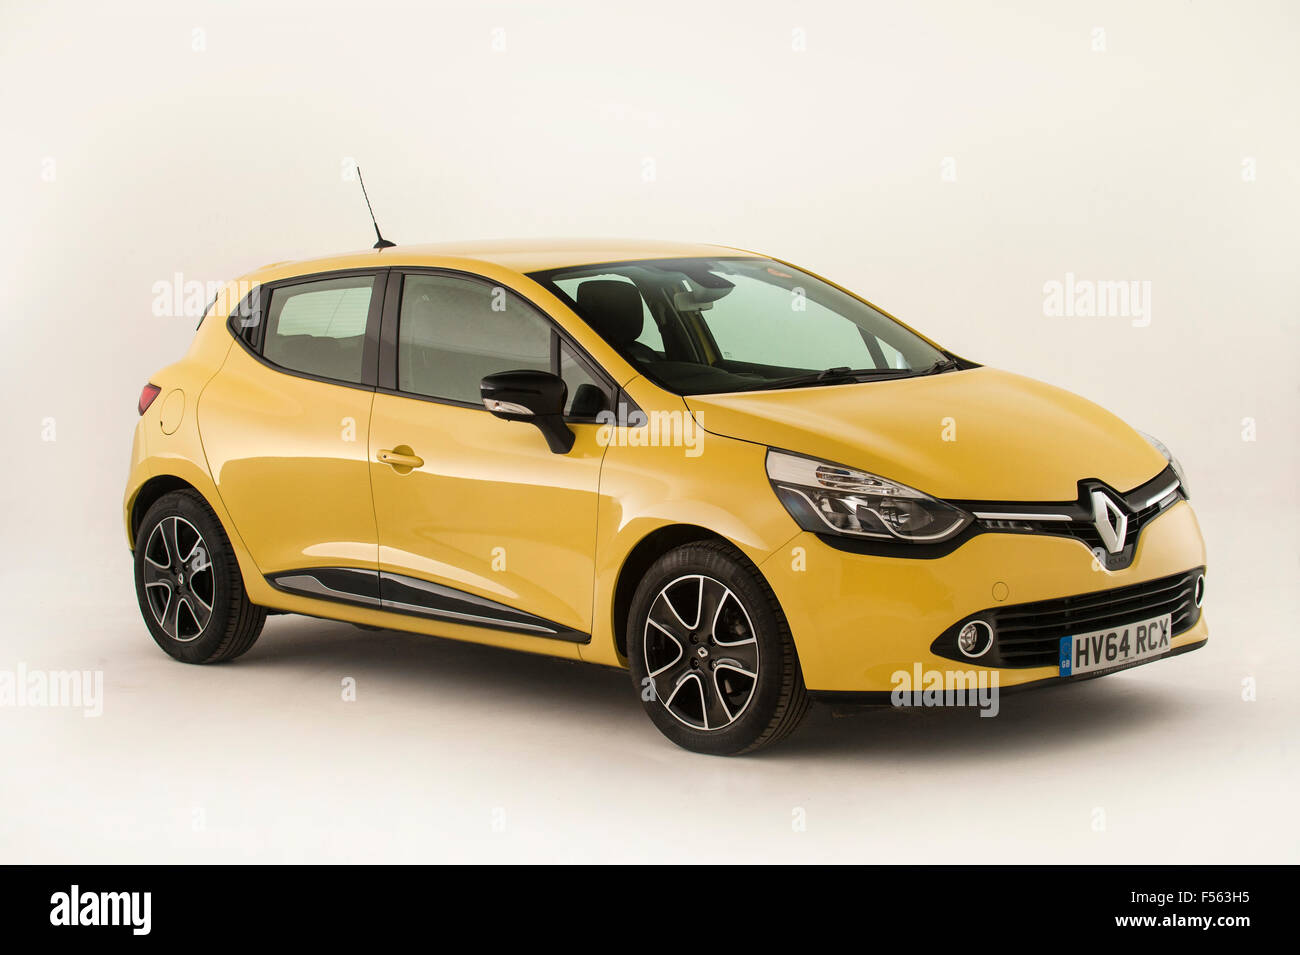 2014 Renault Clio Stockfoto